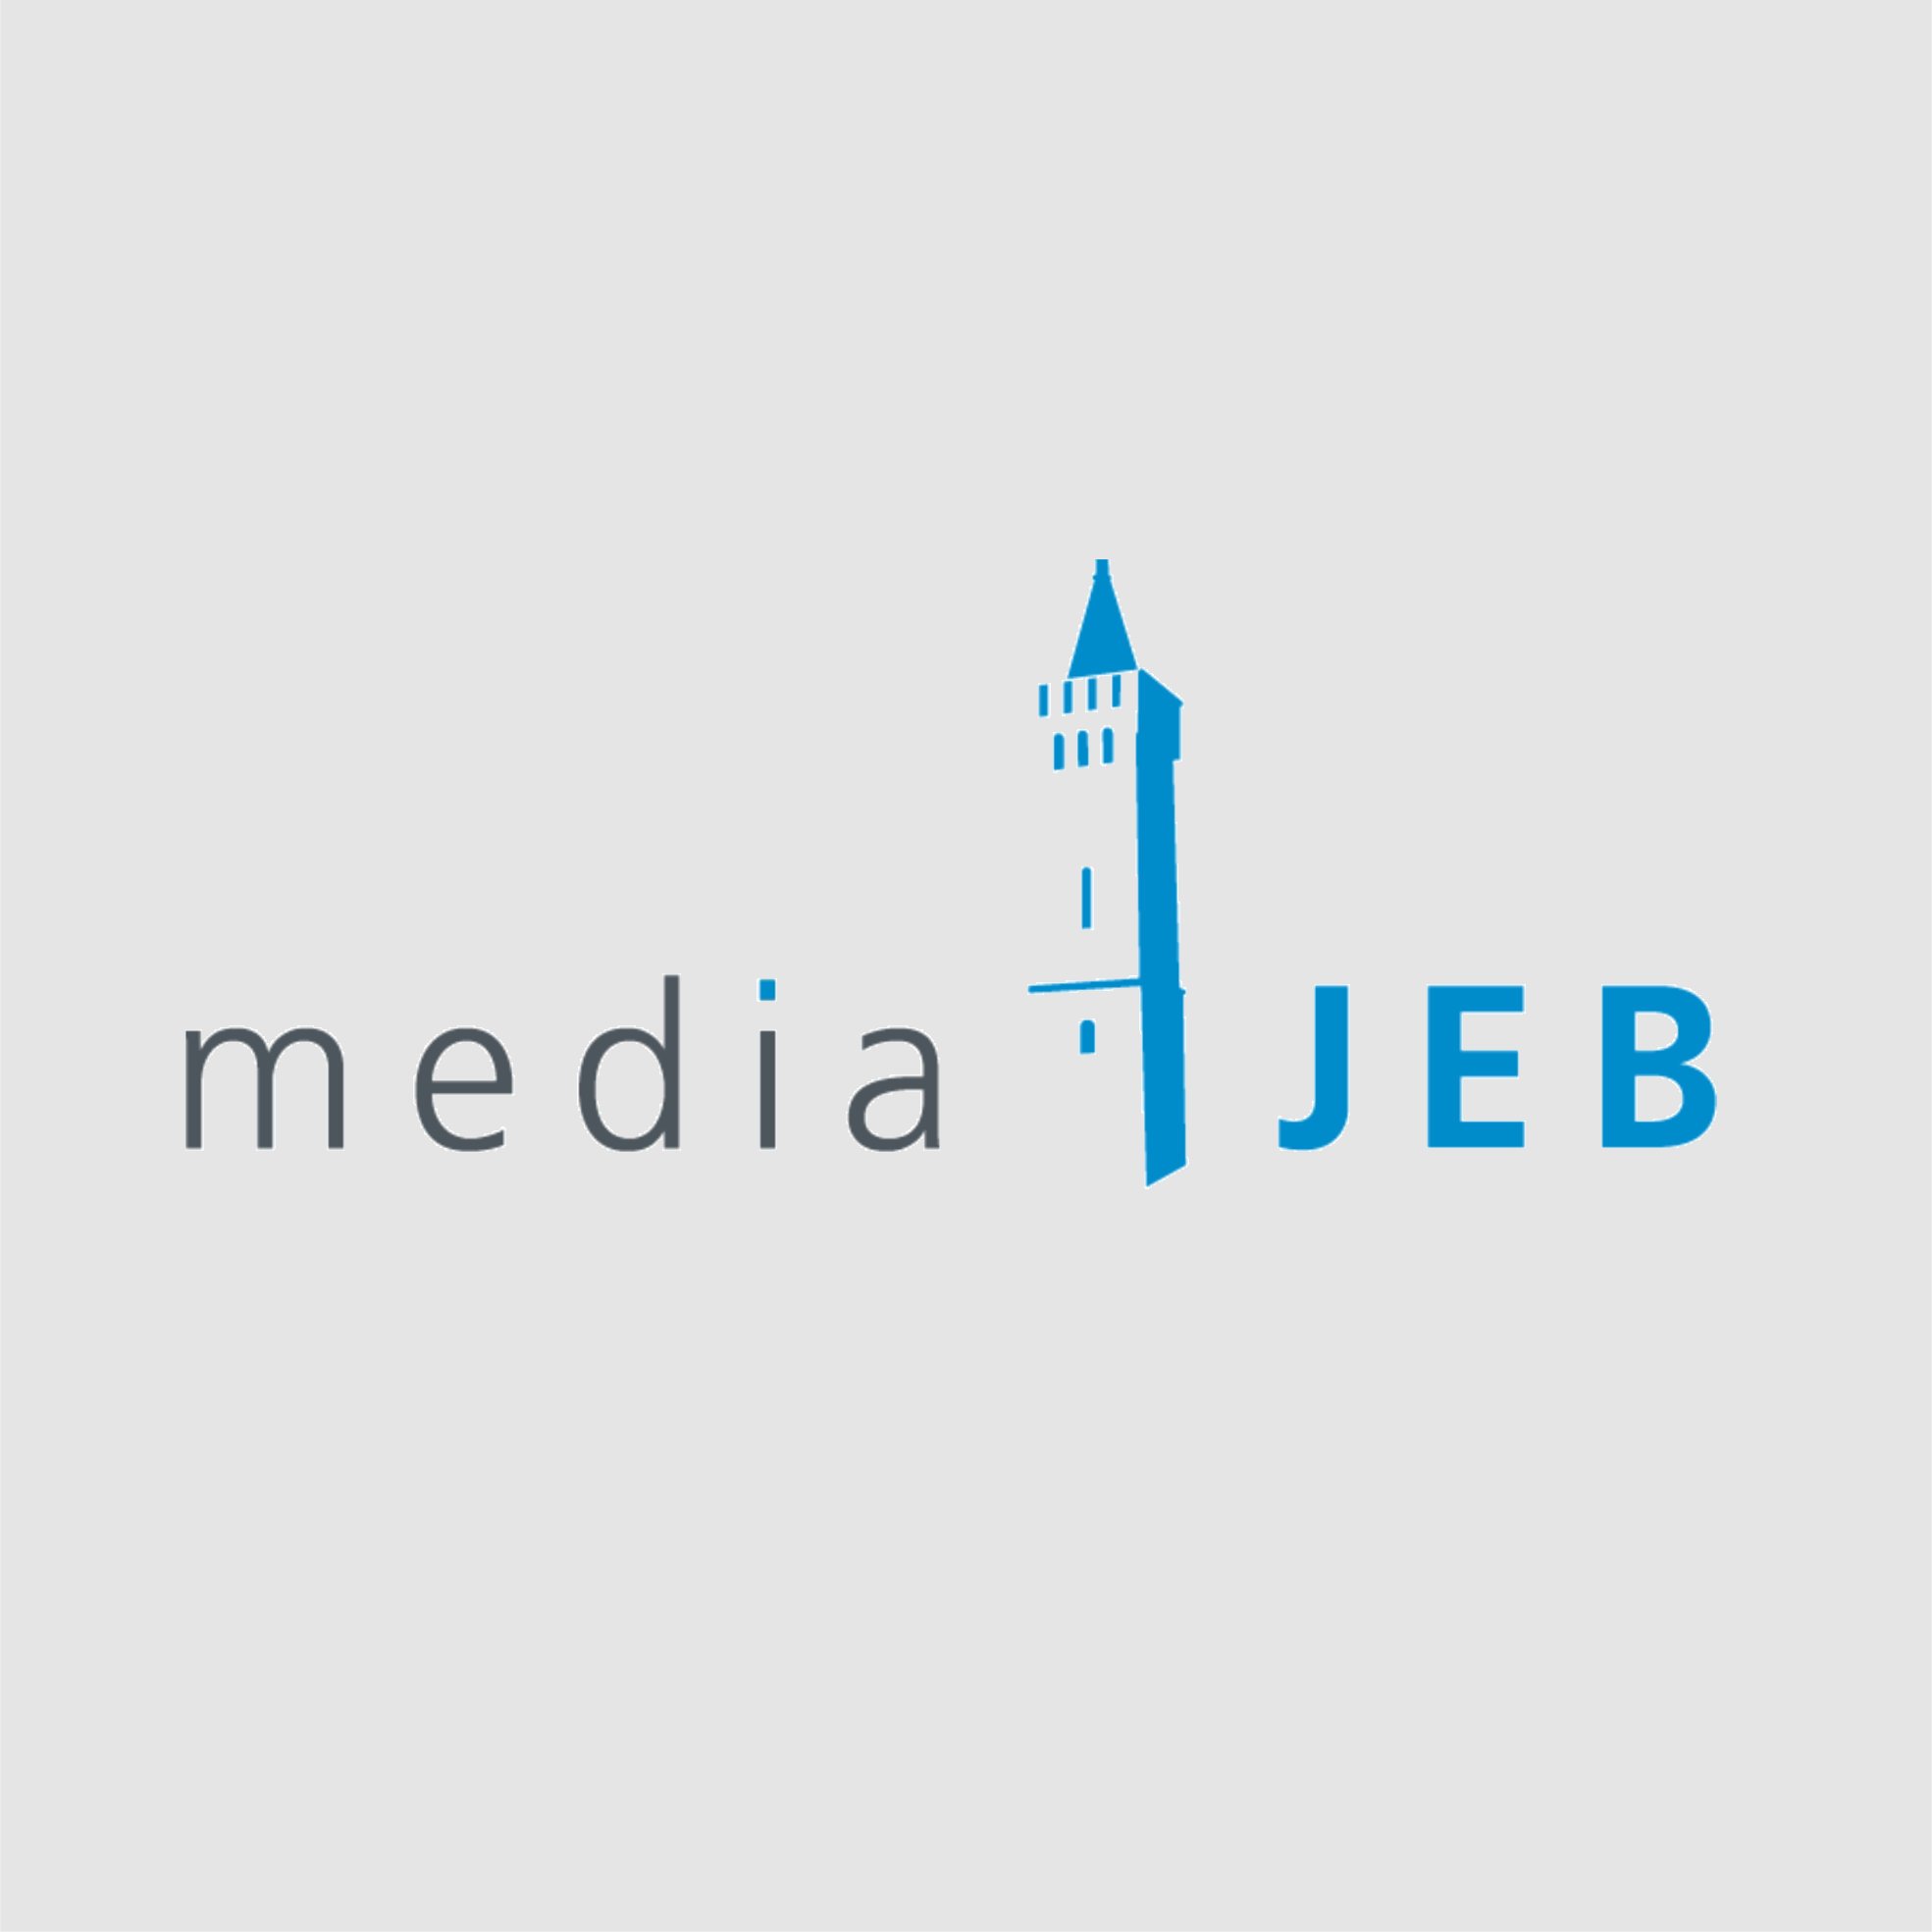 (c) Media-jeb.de